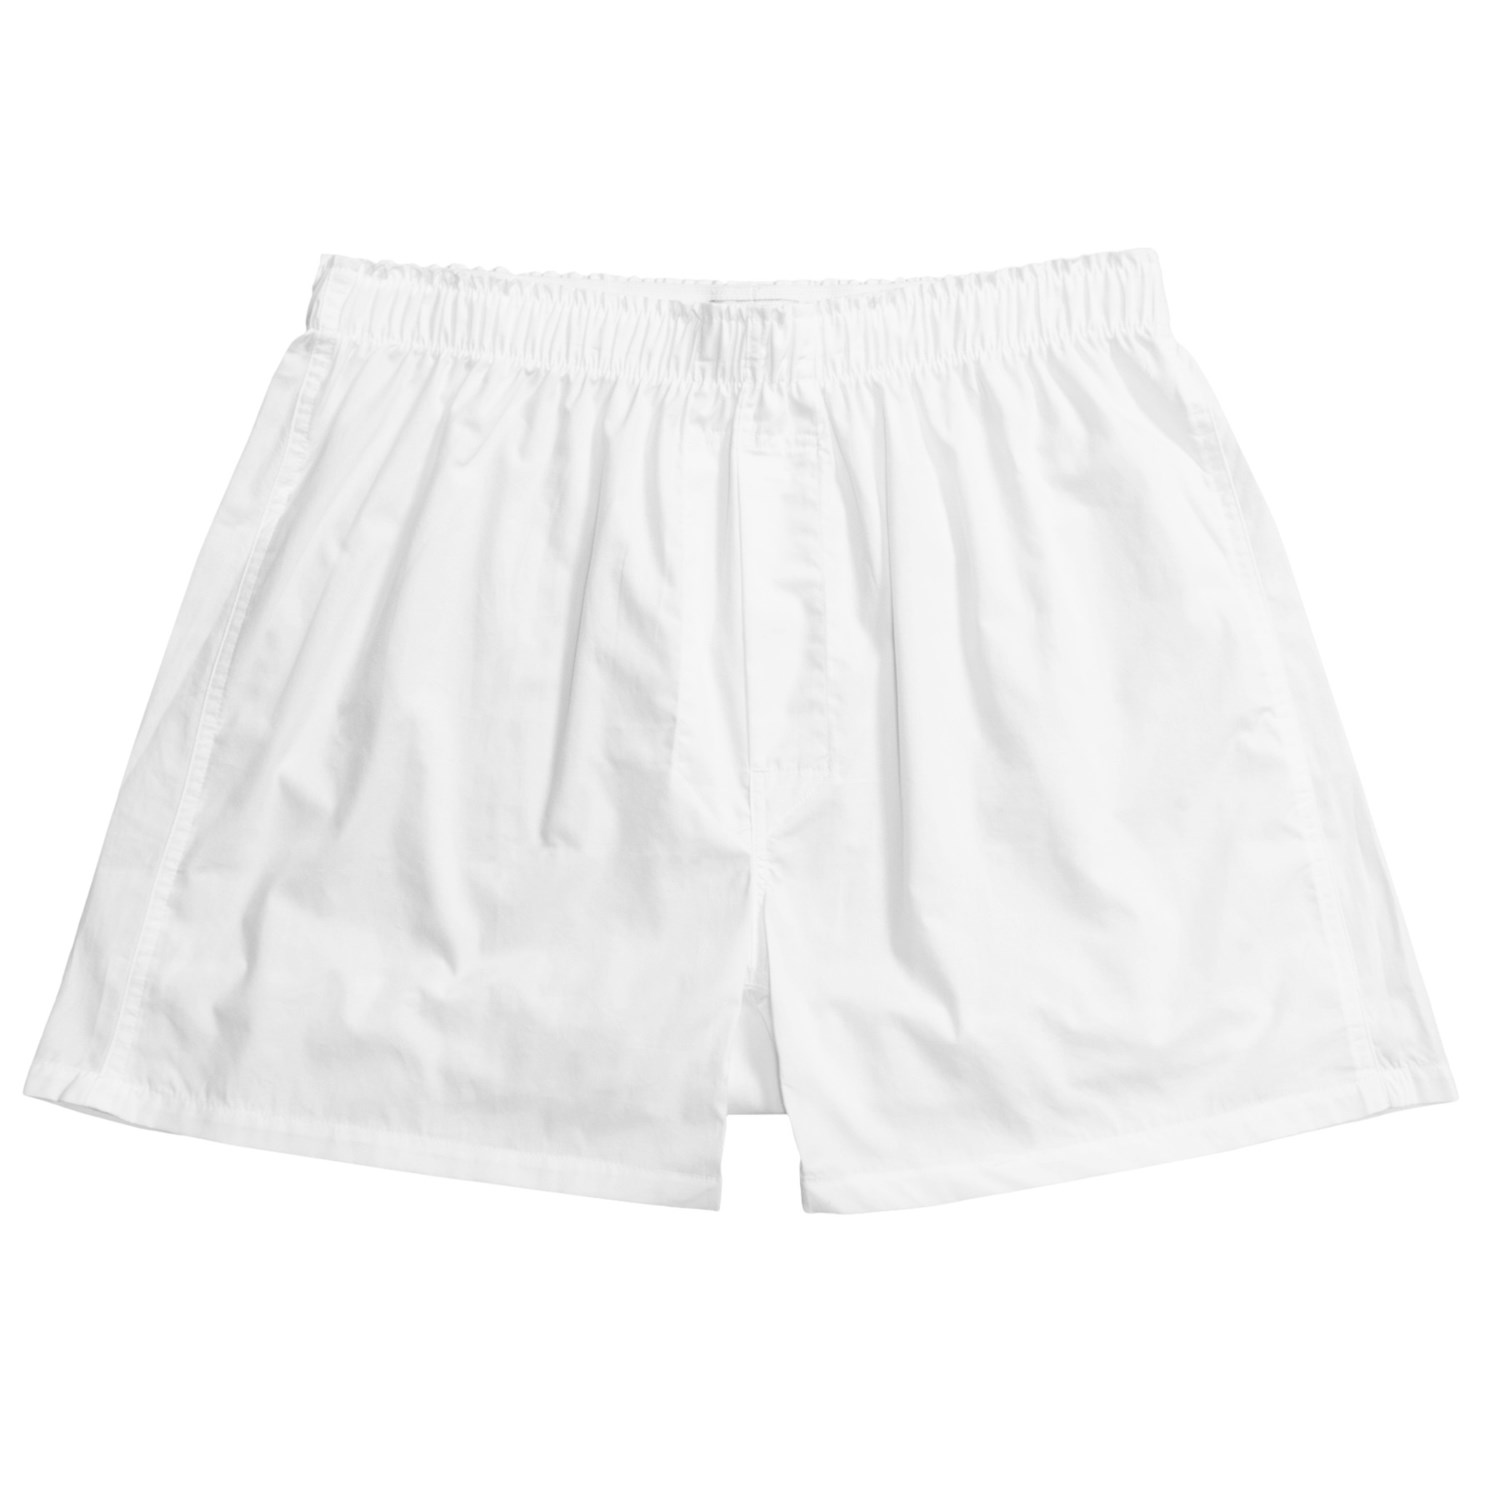 Gitman Brothers Underwear Oxford Cloth Boxer Shorts (For Big Men) 15284 ...